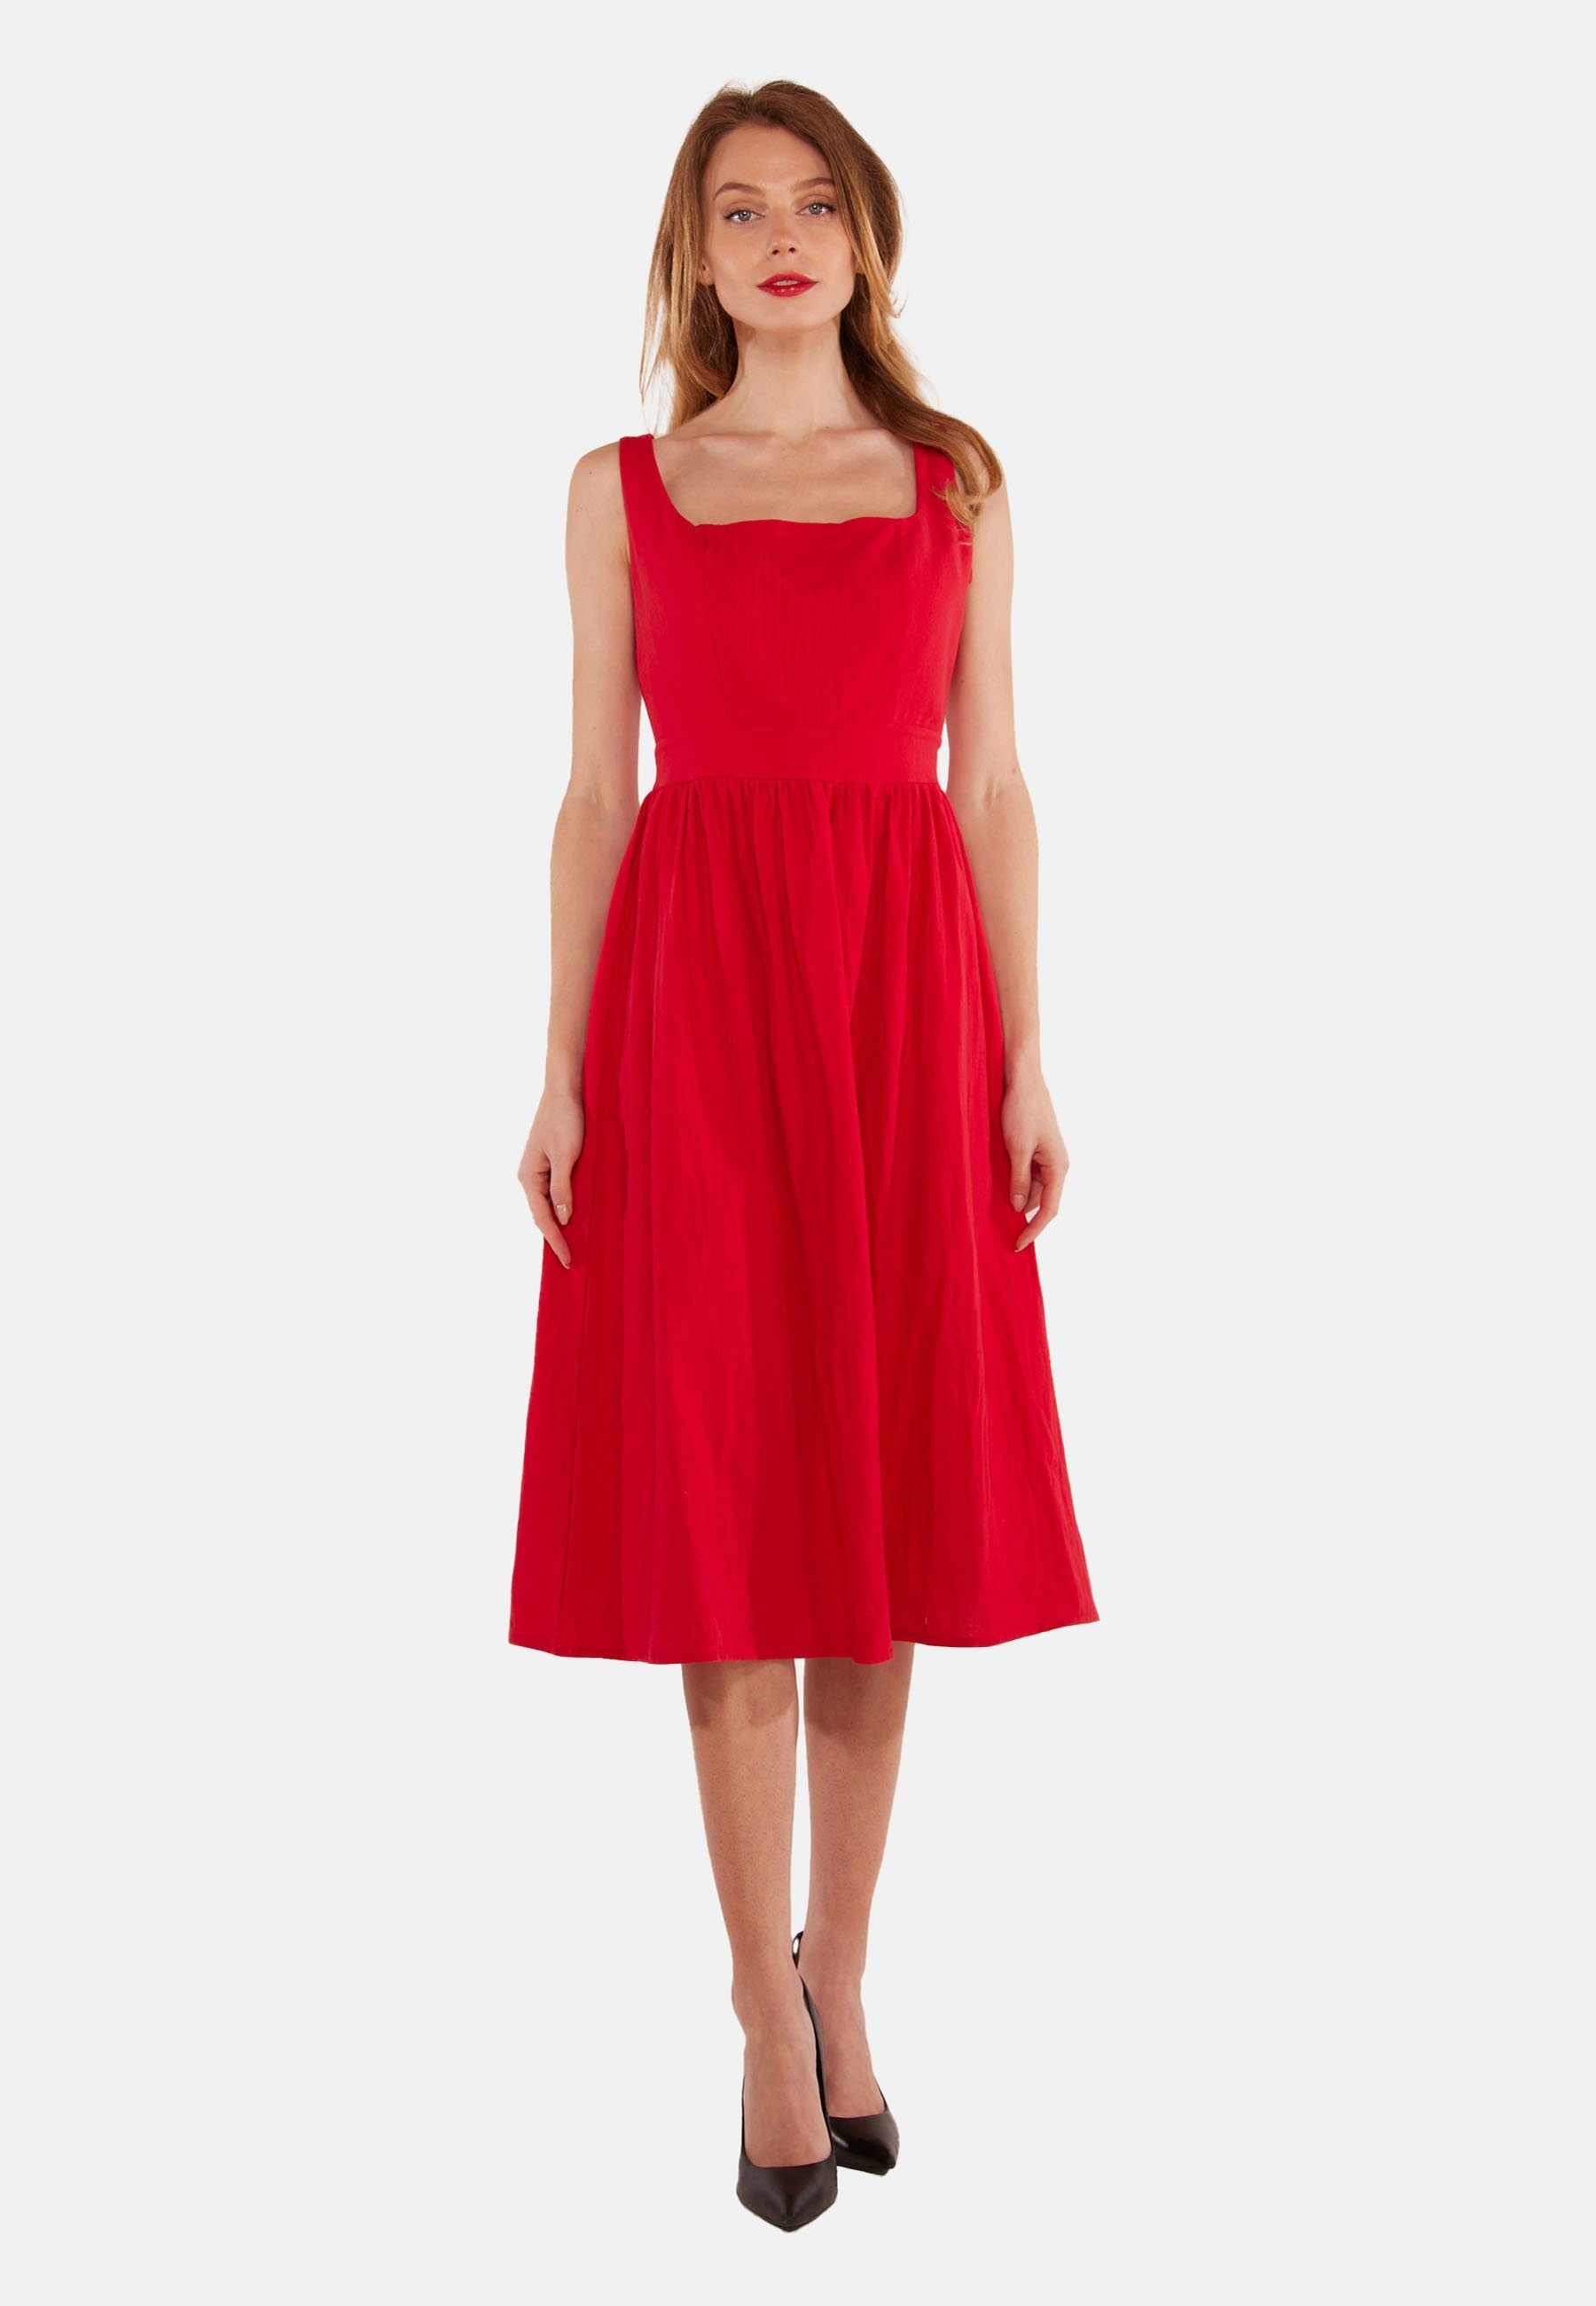 Tooche Midikleid Kleid Rot atmungsaktiv